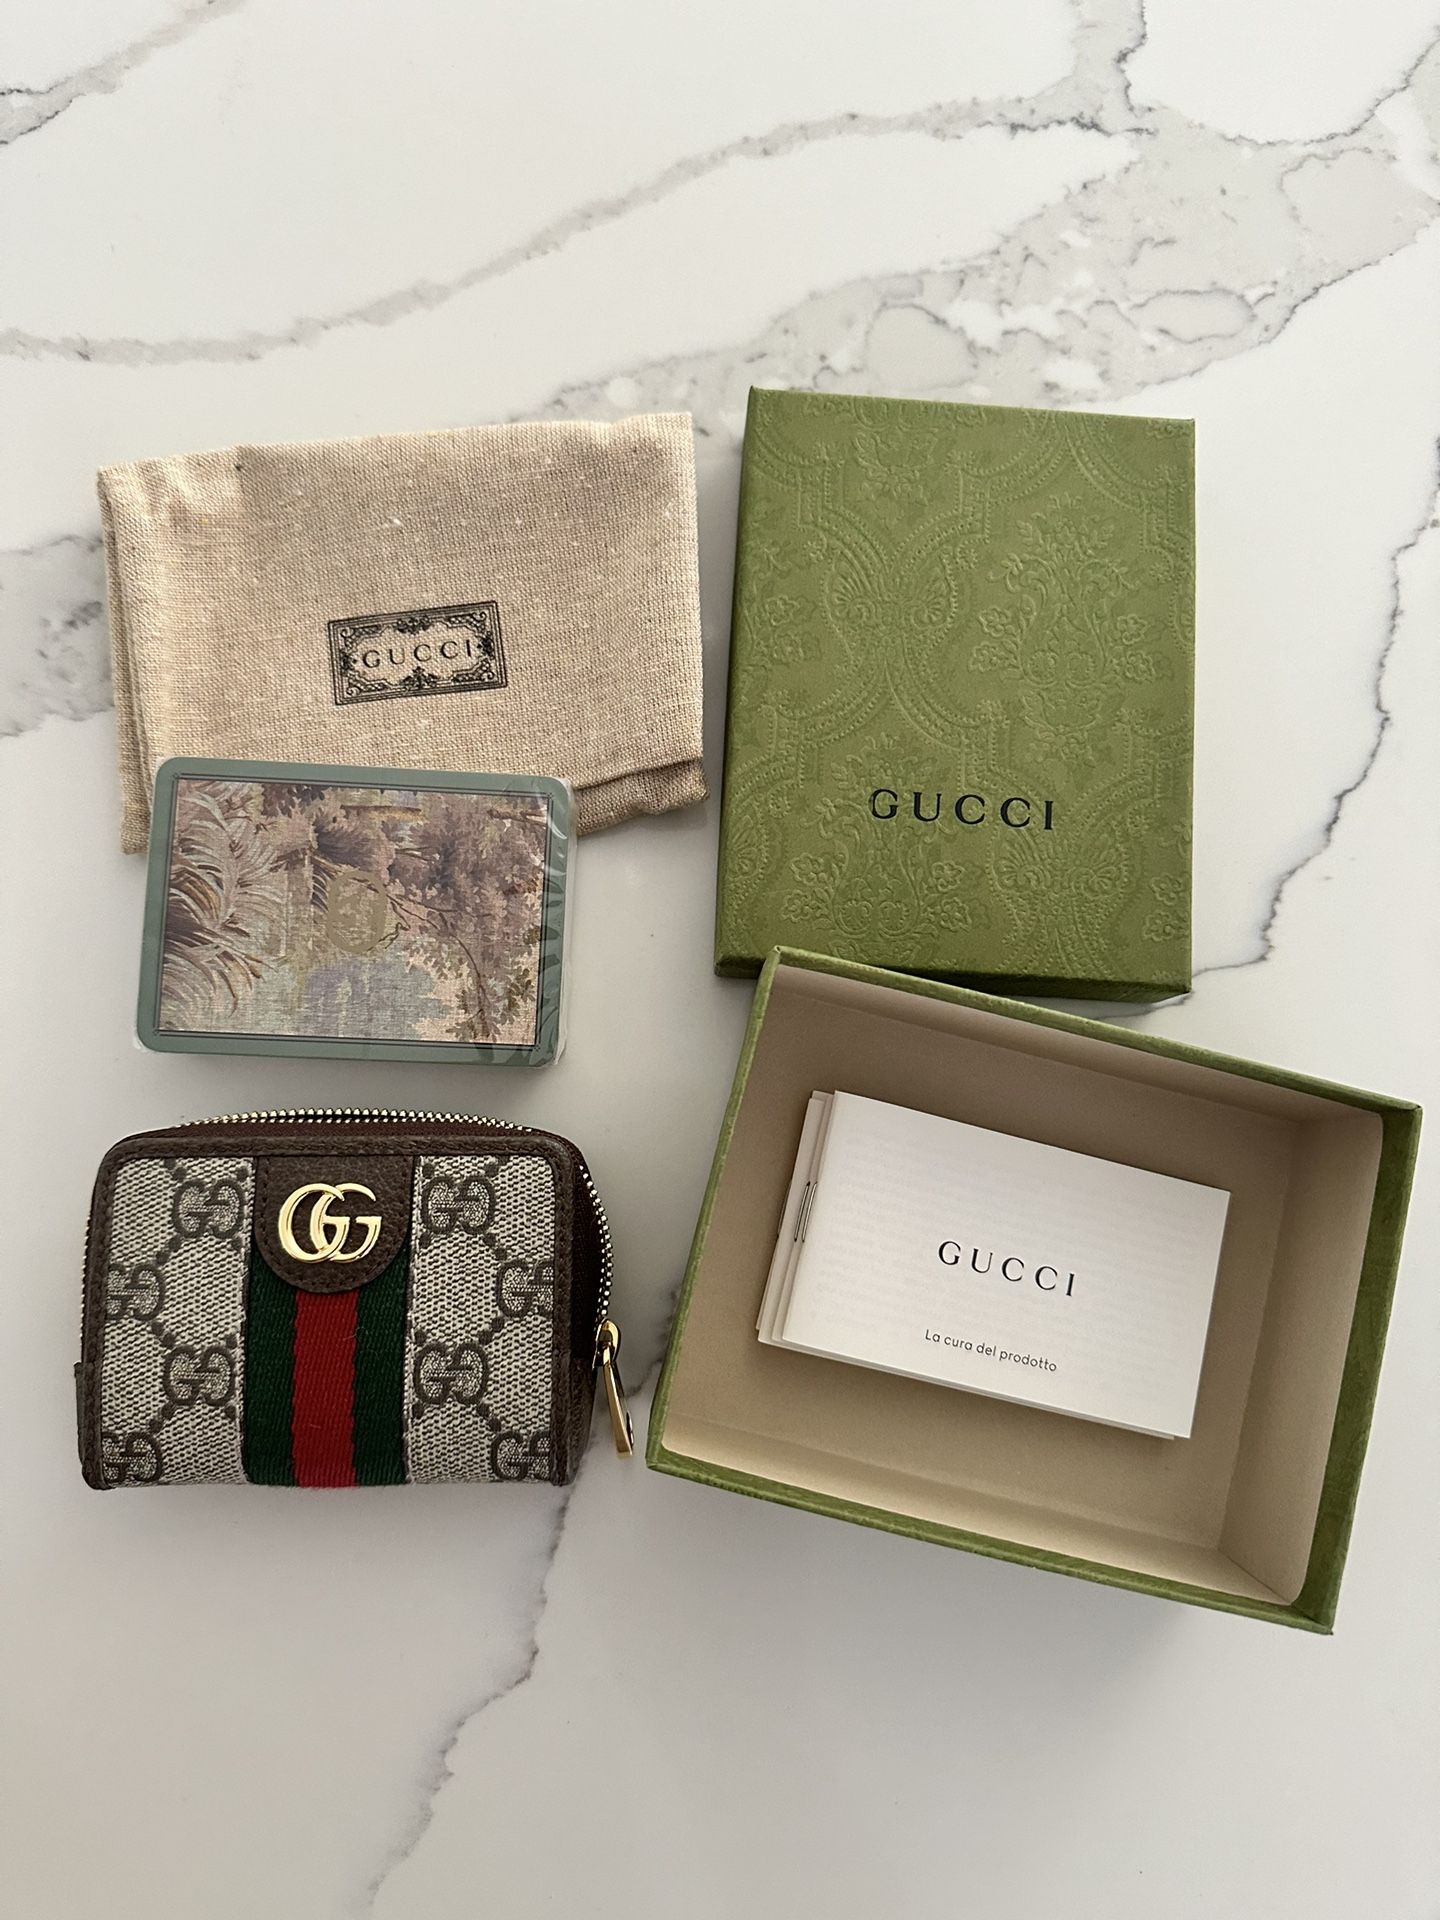 Authentic Gucci Card Set 